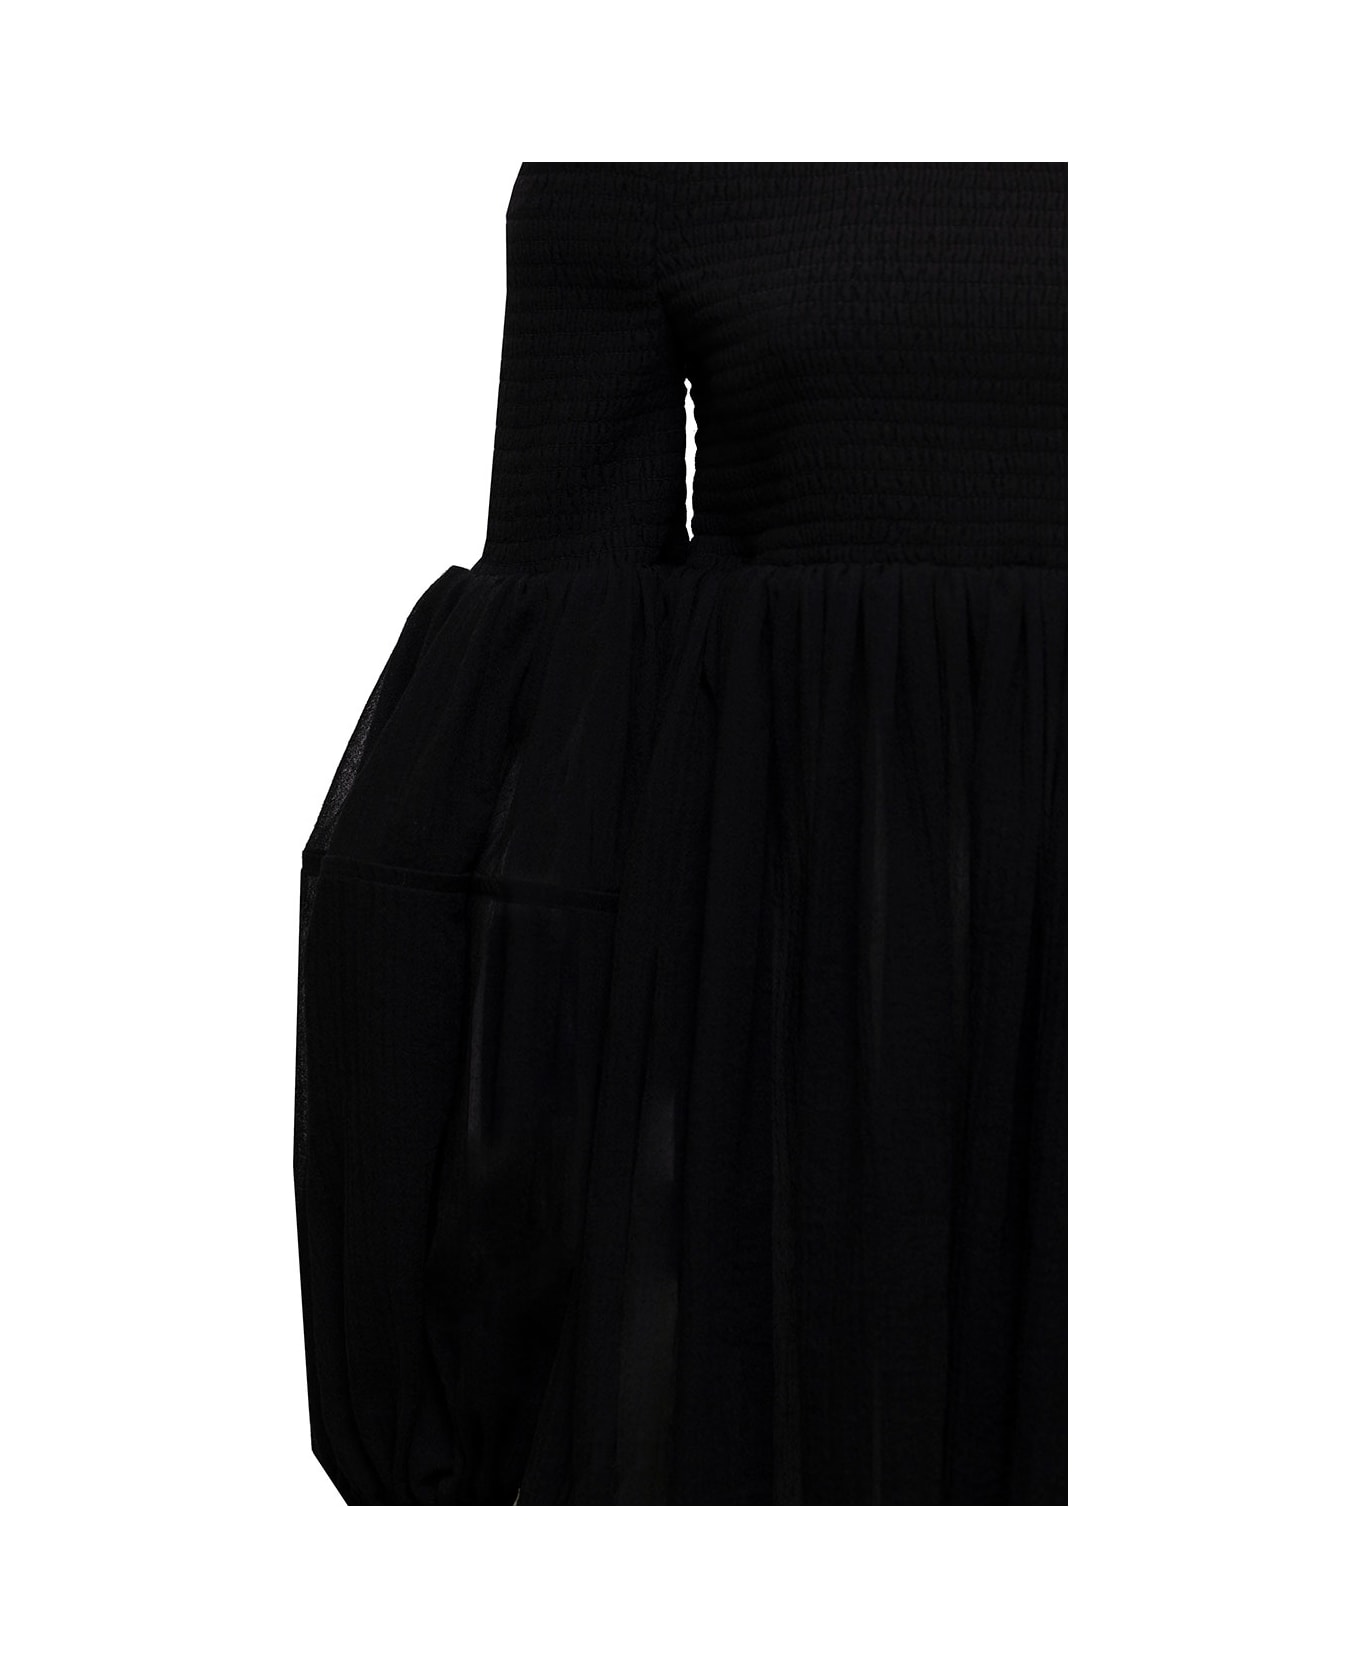 Chloé Woman's Off Shoulder Black Wool Muslin Blouse - Black